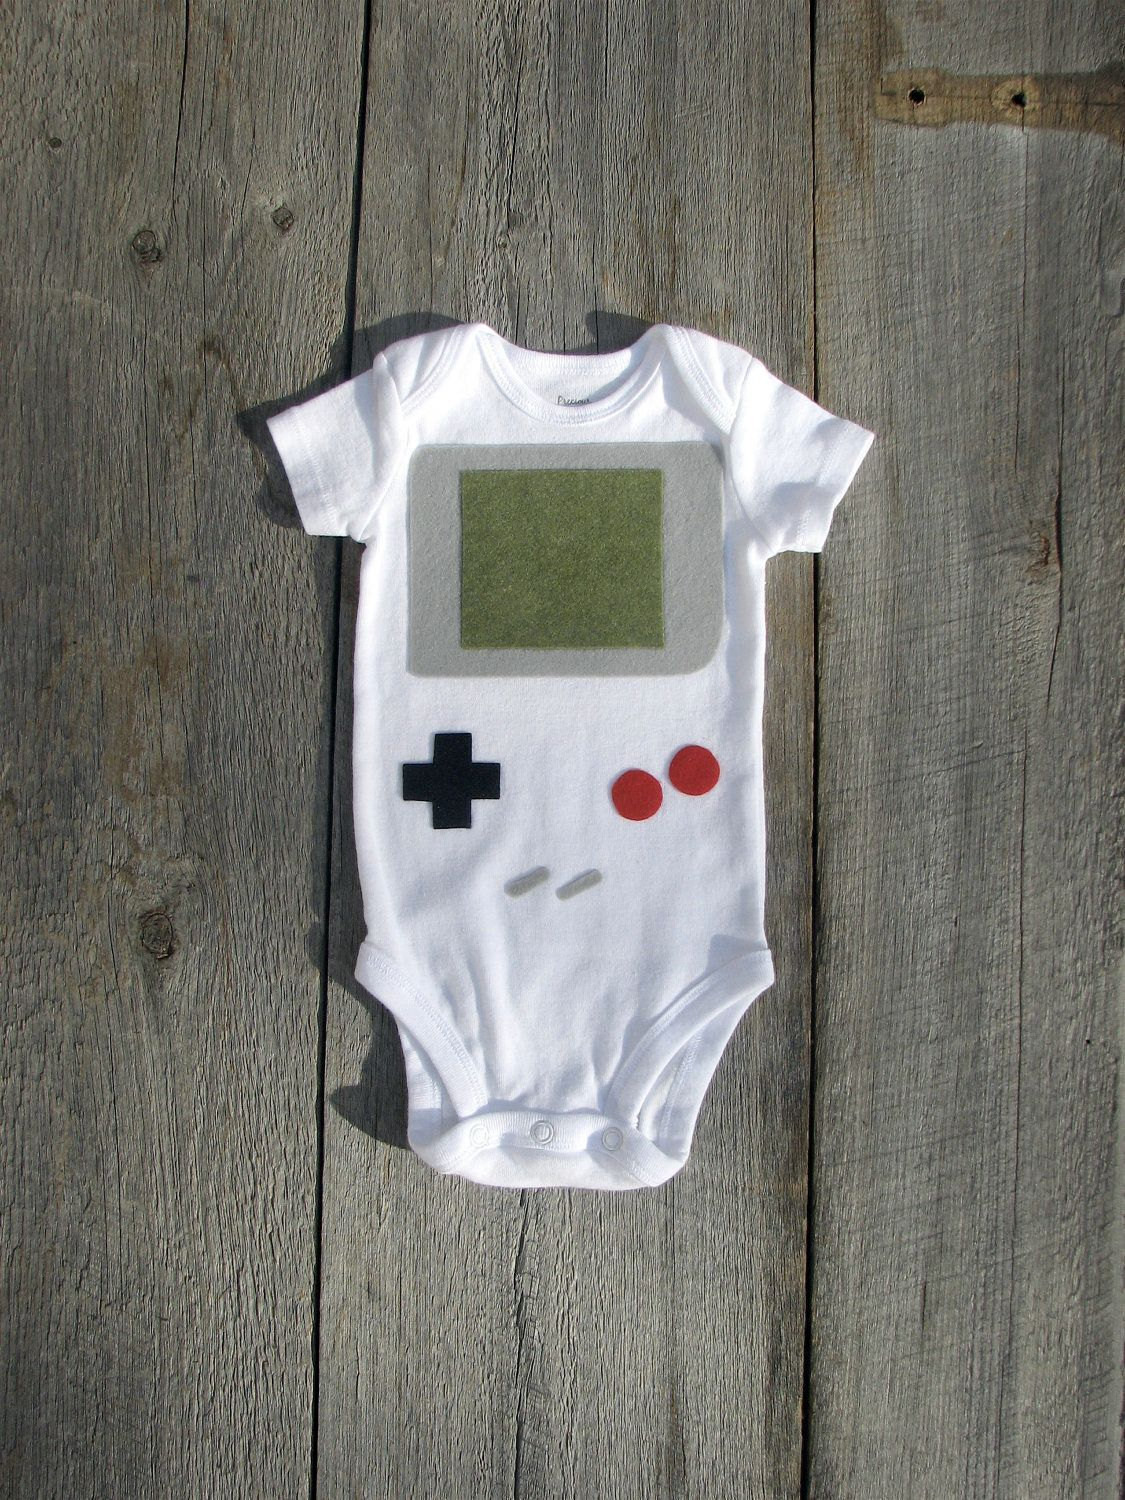 Baby Fashion Games
 Baby Shower Gift Retro Bodysuit Handheld Video Game Baby